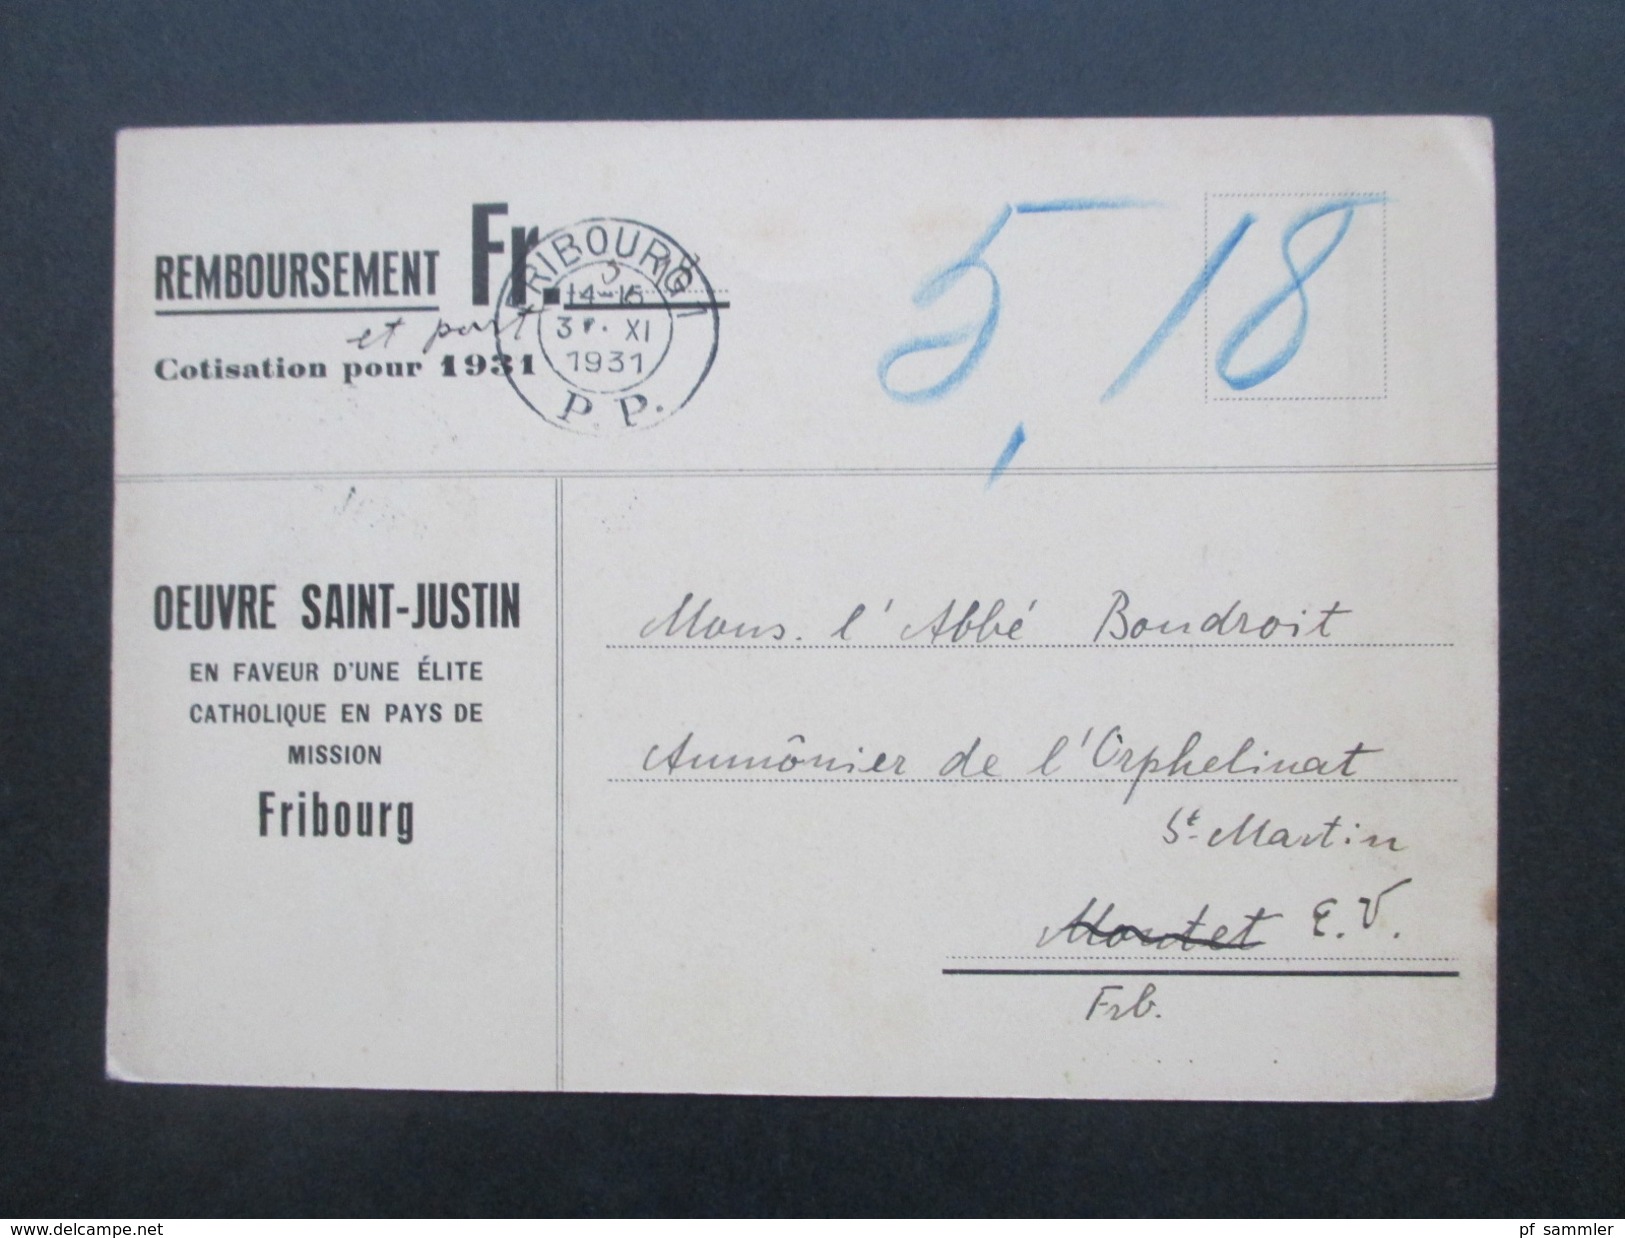 Schweiz 1911 / 42 PP Belege / Karten insgesamt 14 Stk. Nachnahme. Basel Paketannahme usw. Todesanzeige.